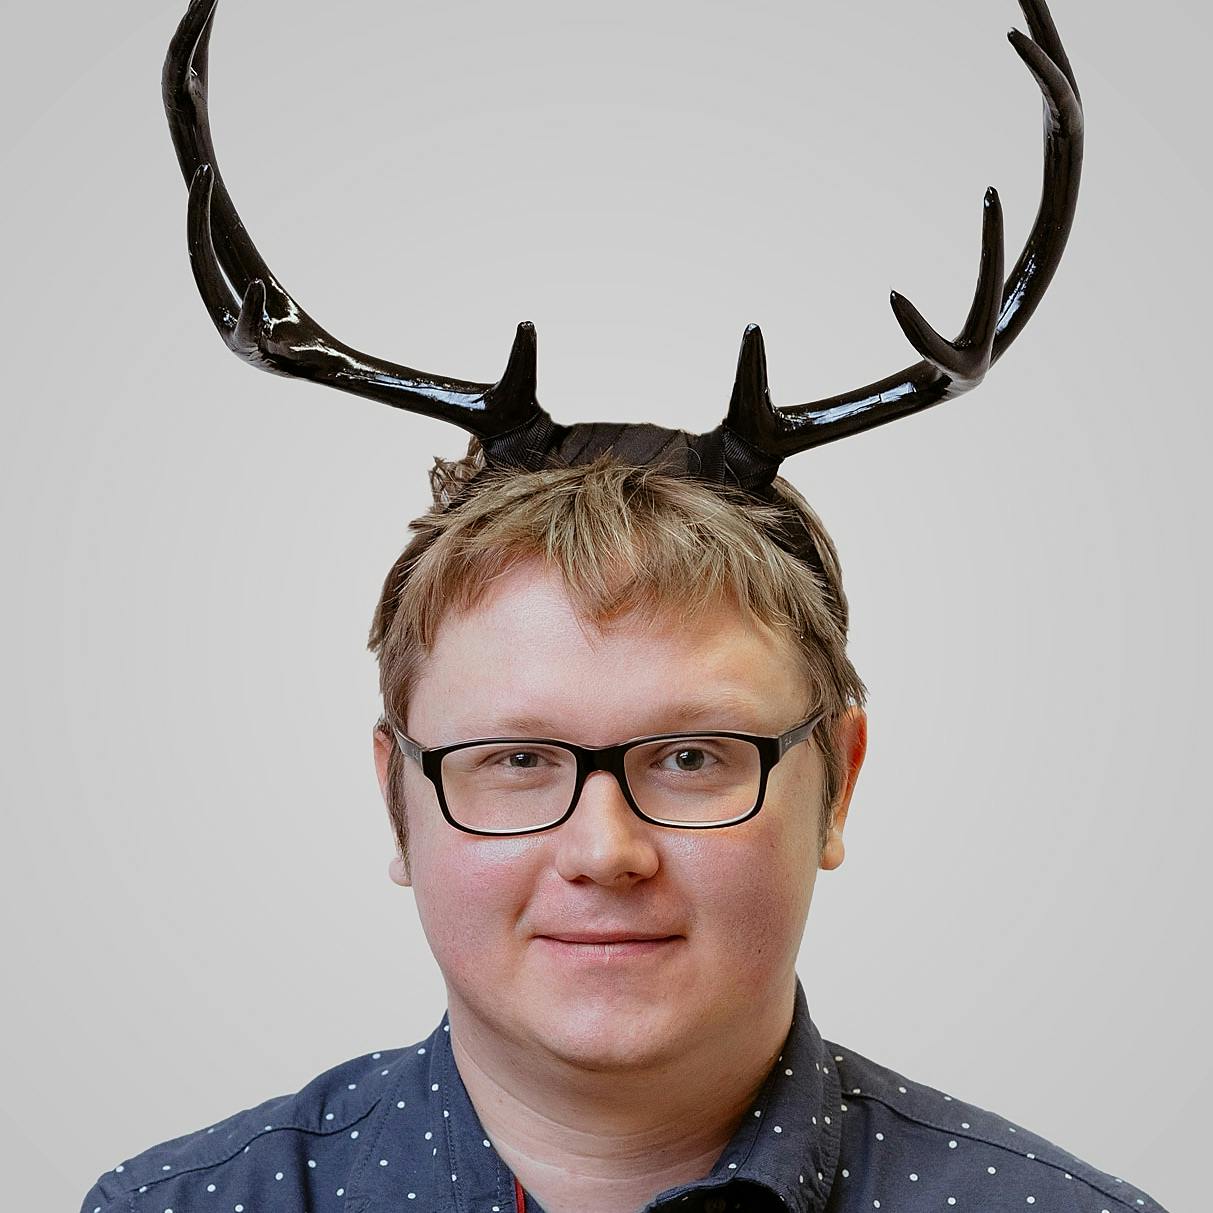 Łukasz Wroński HackerNoon profile picture